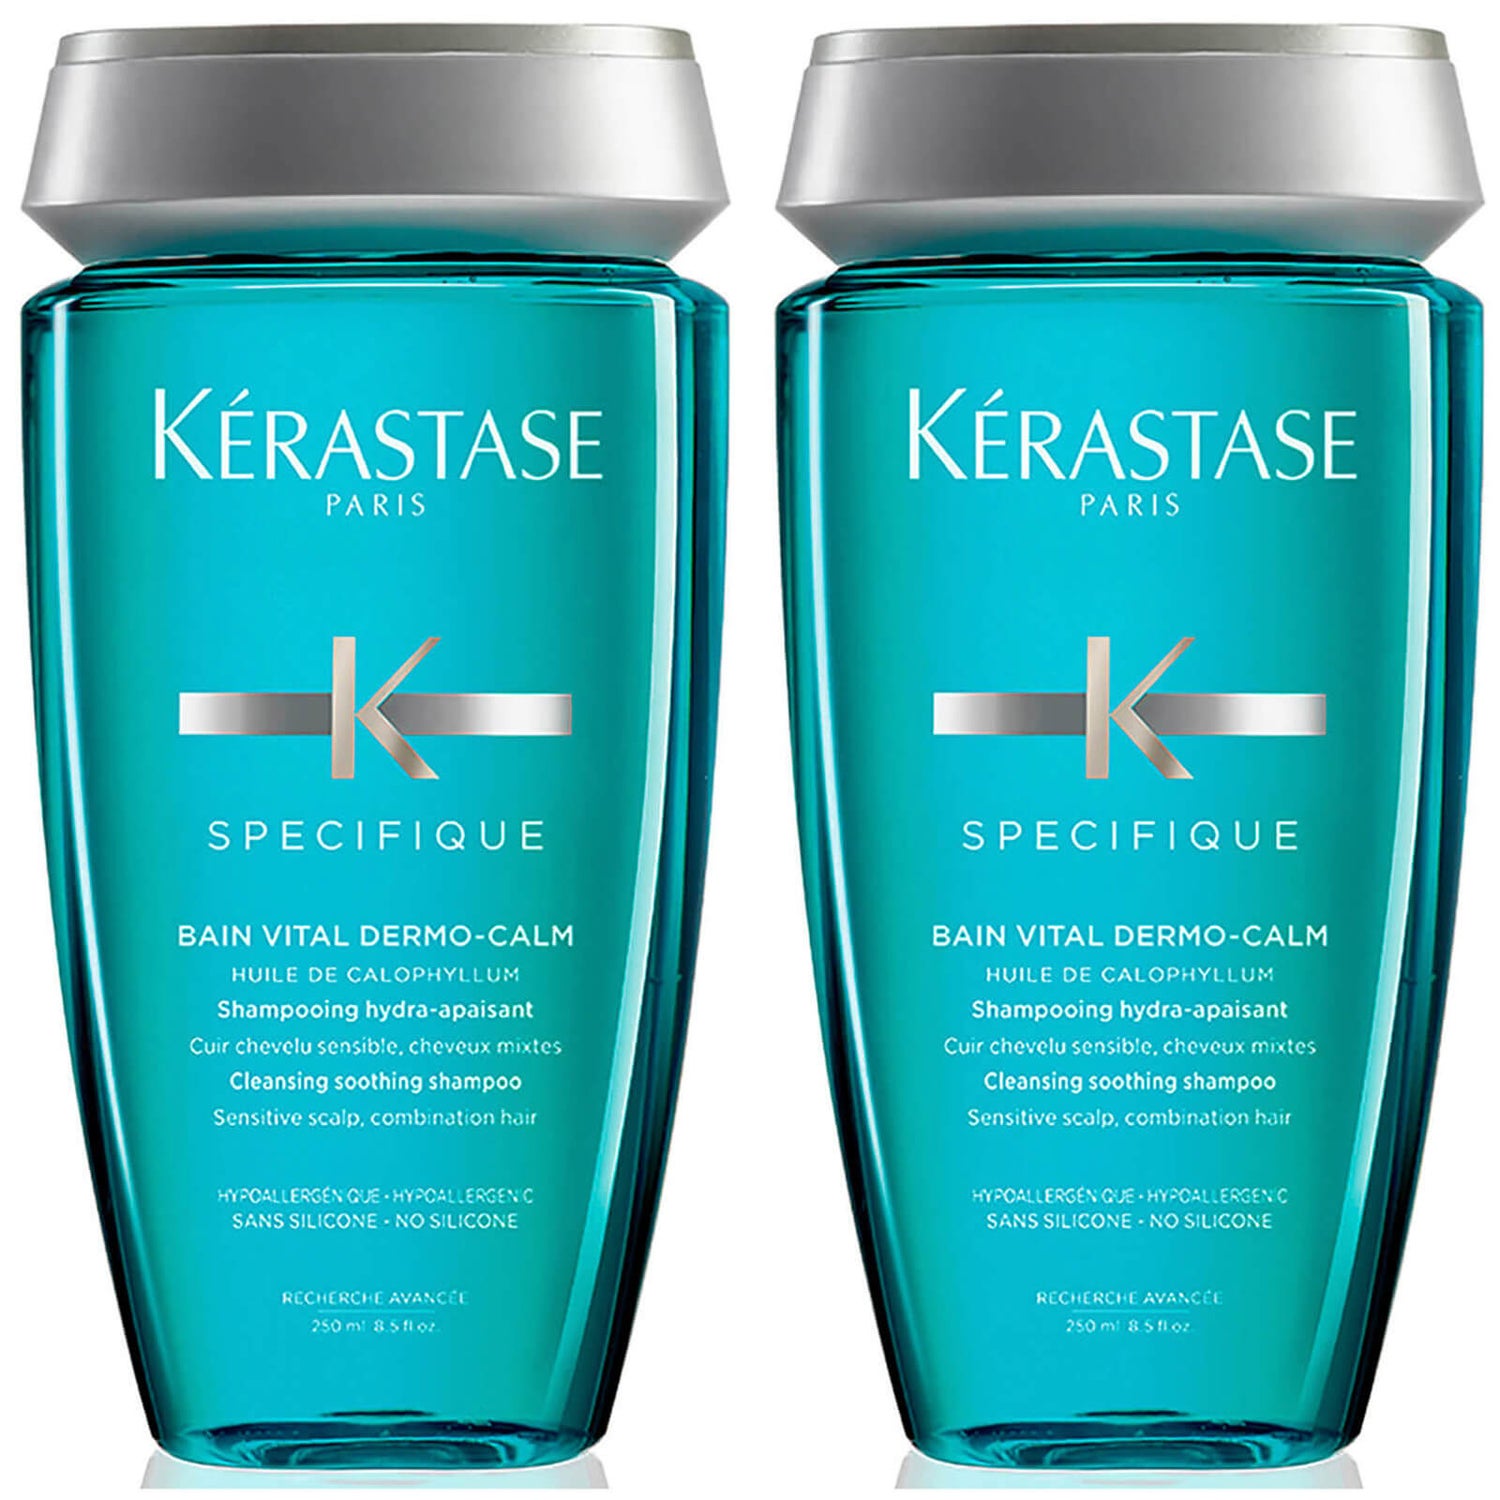 Kérastase Specifique Dermo-Calm Bain Vital Shampoo 250ml Duo - LOOKFANTASTIC